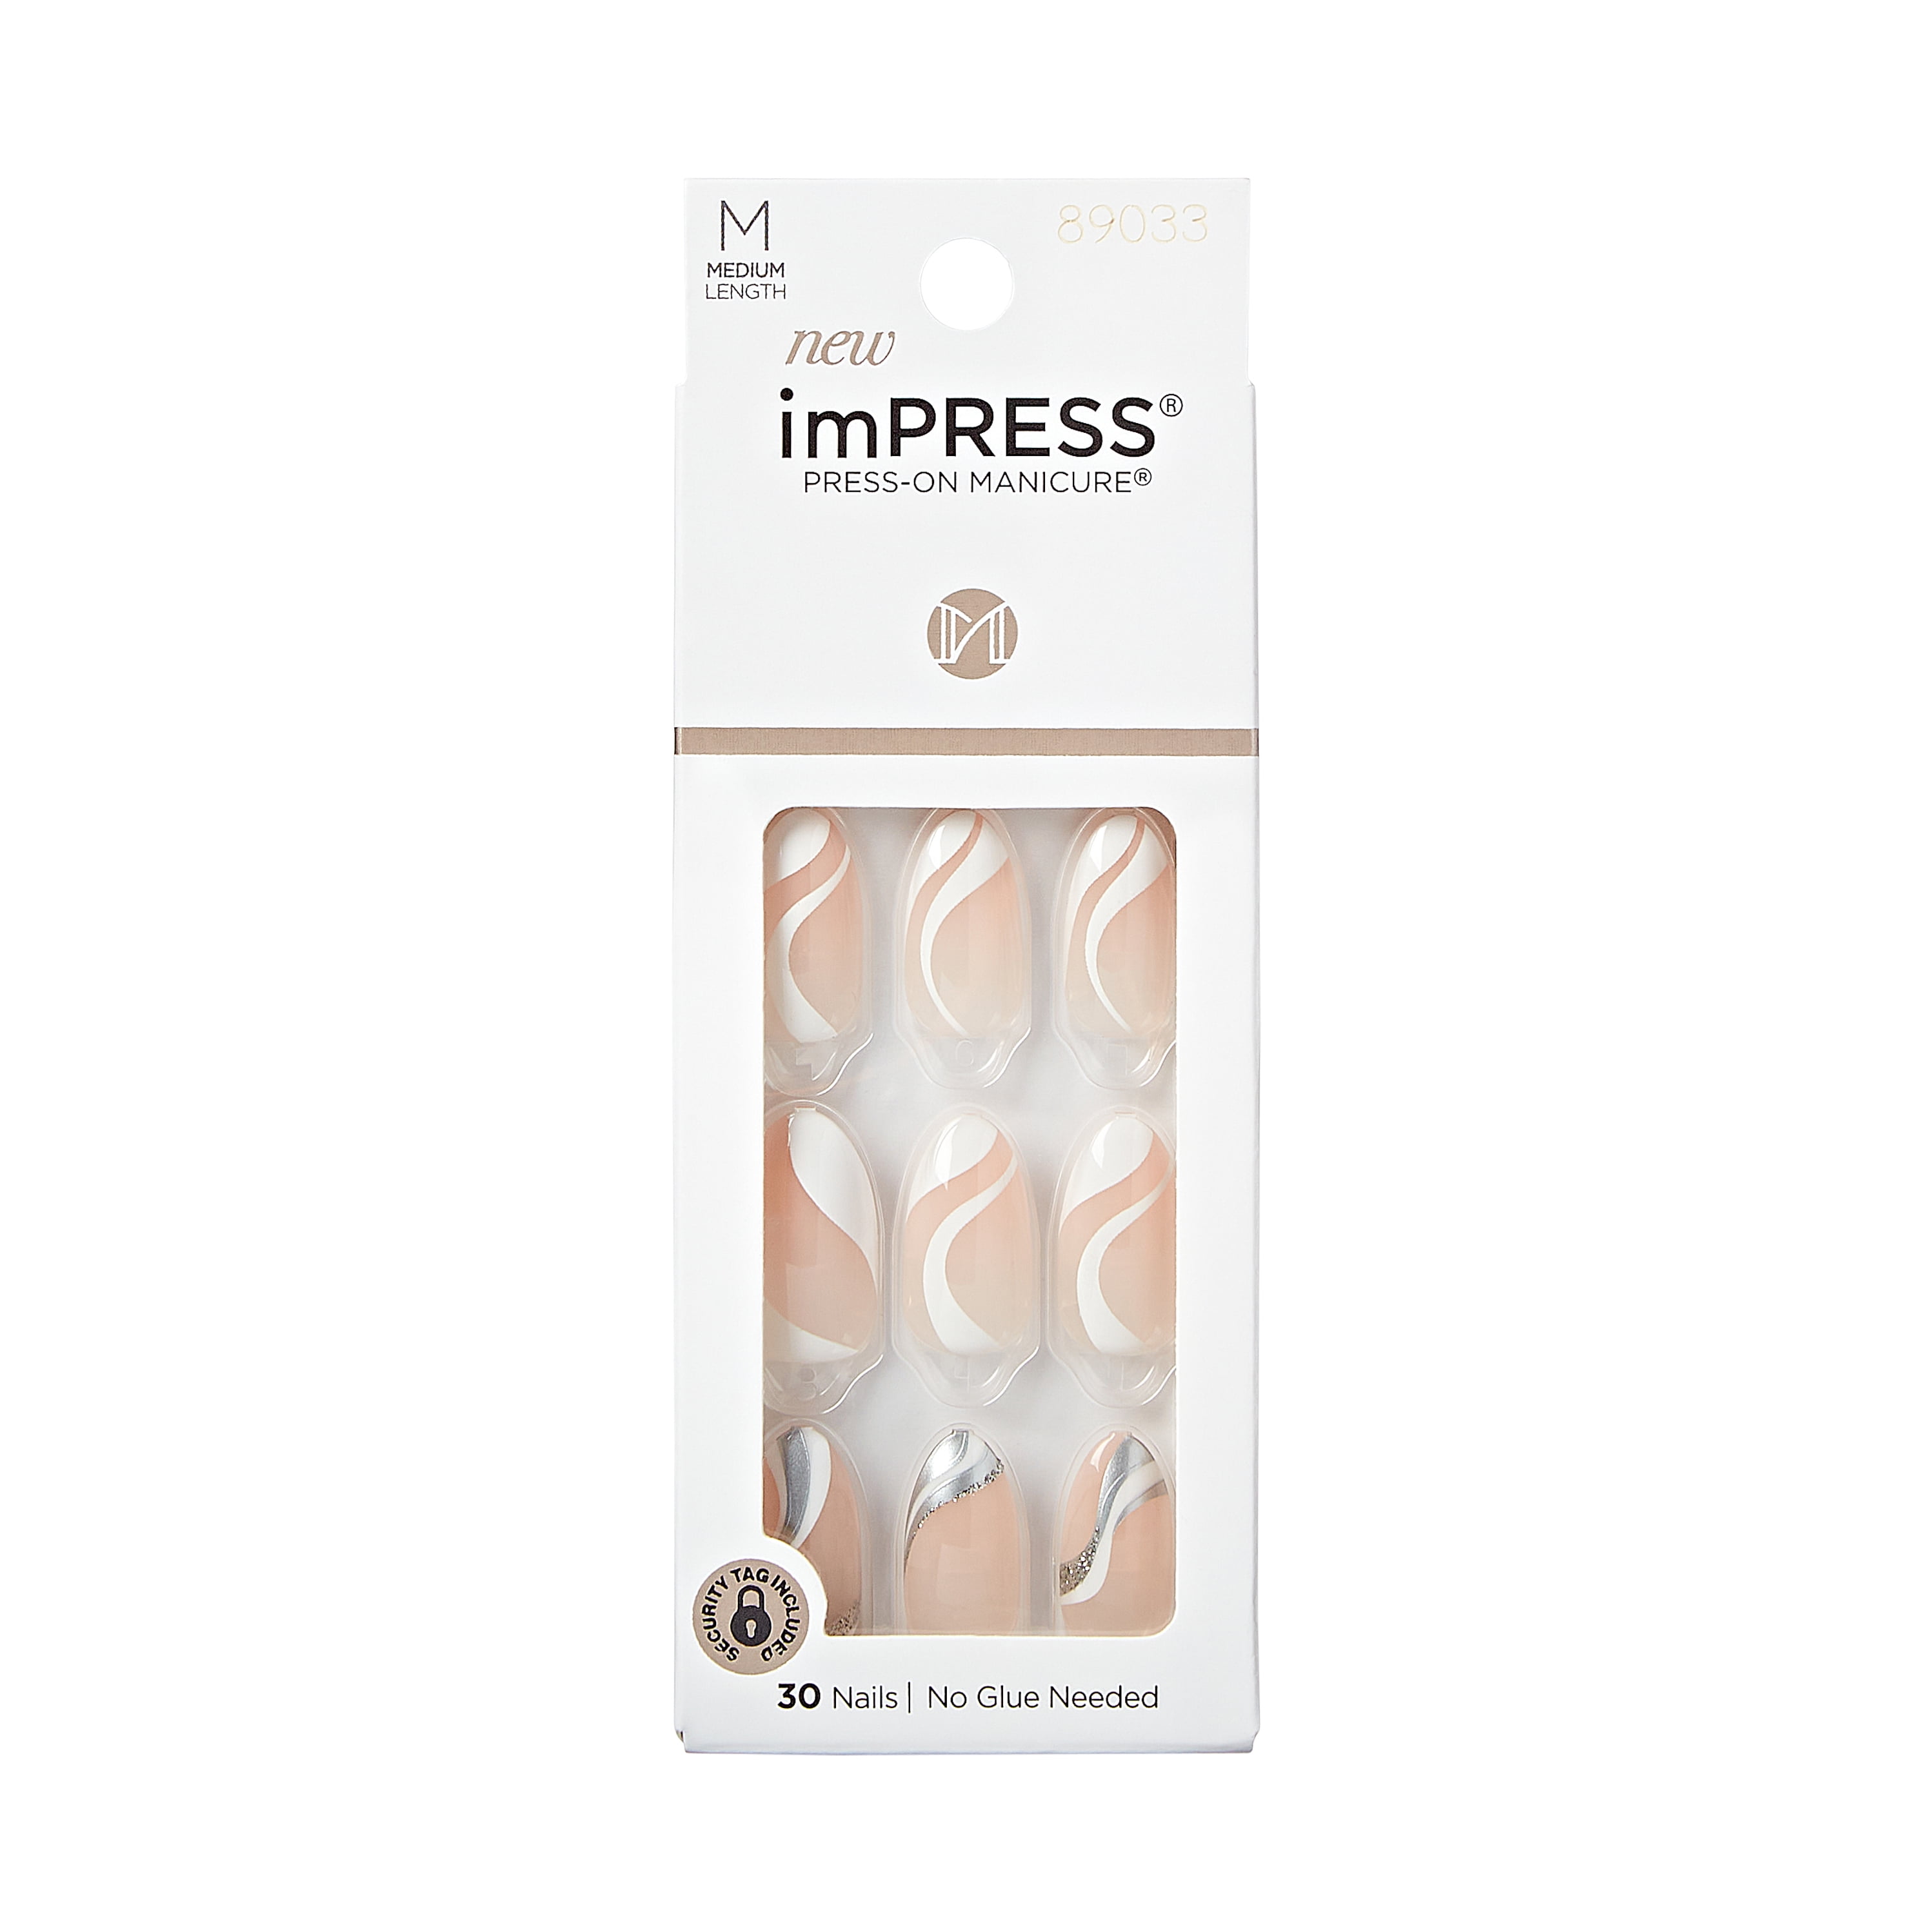 KISS imPRESS Premium Medium Almond Press-On Nails, Glossy Pink, 30 Pieces -  Walmart.com